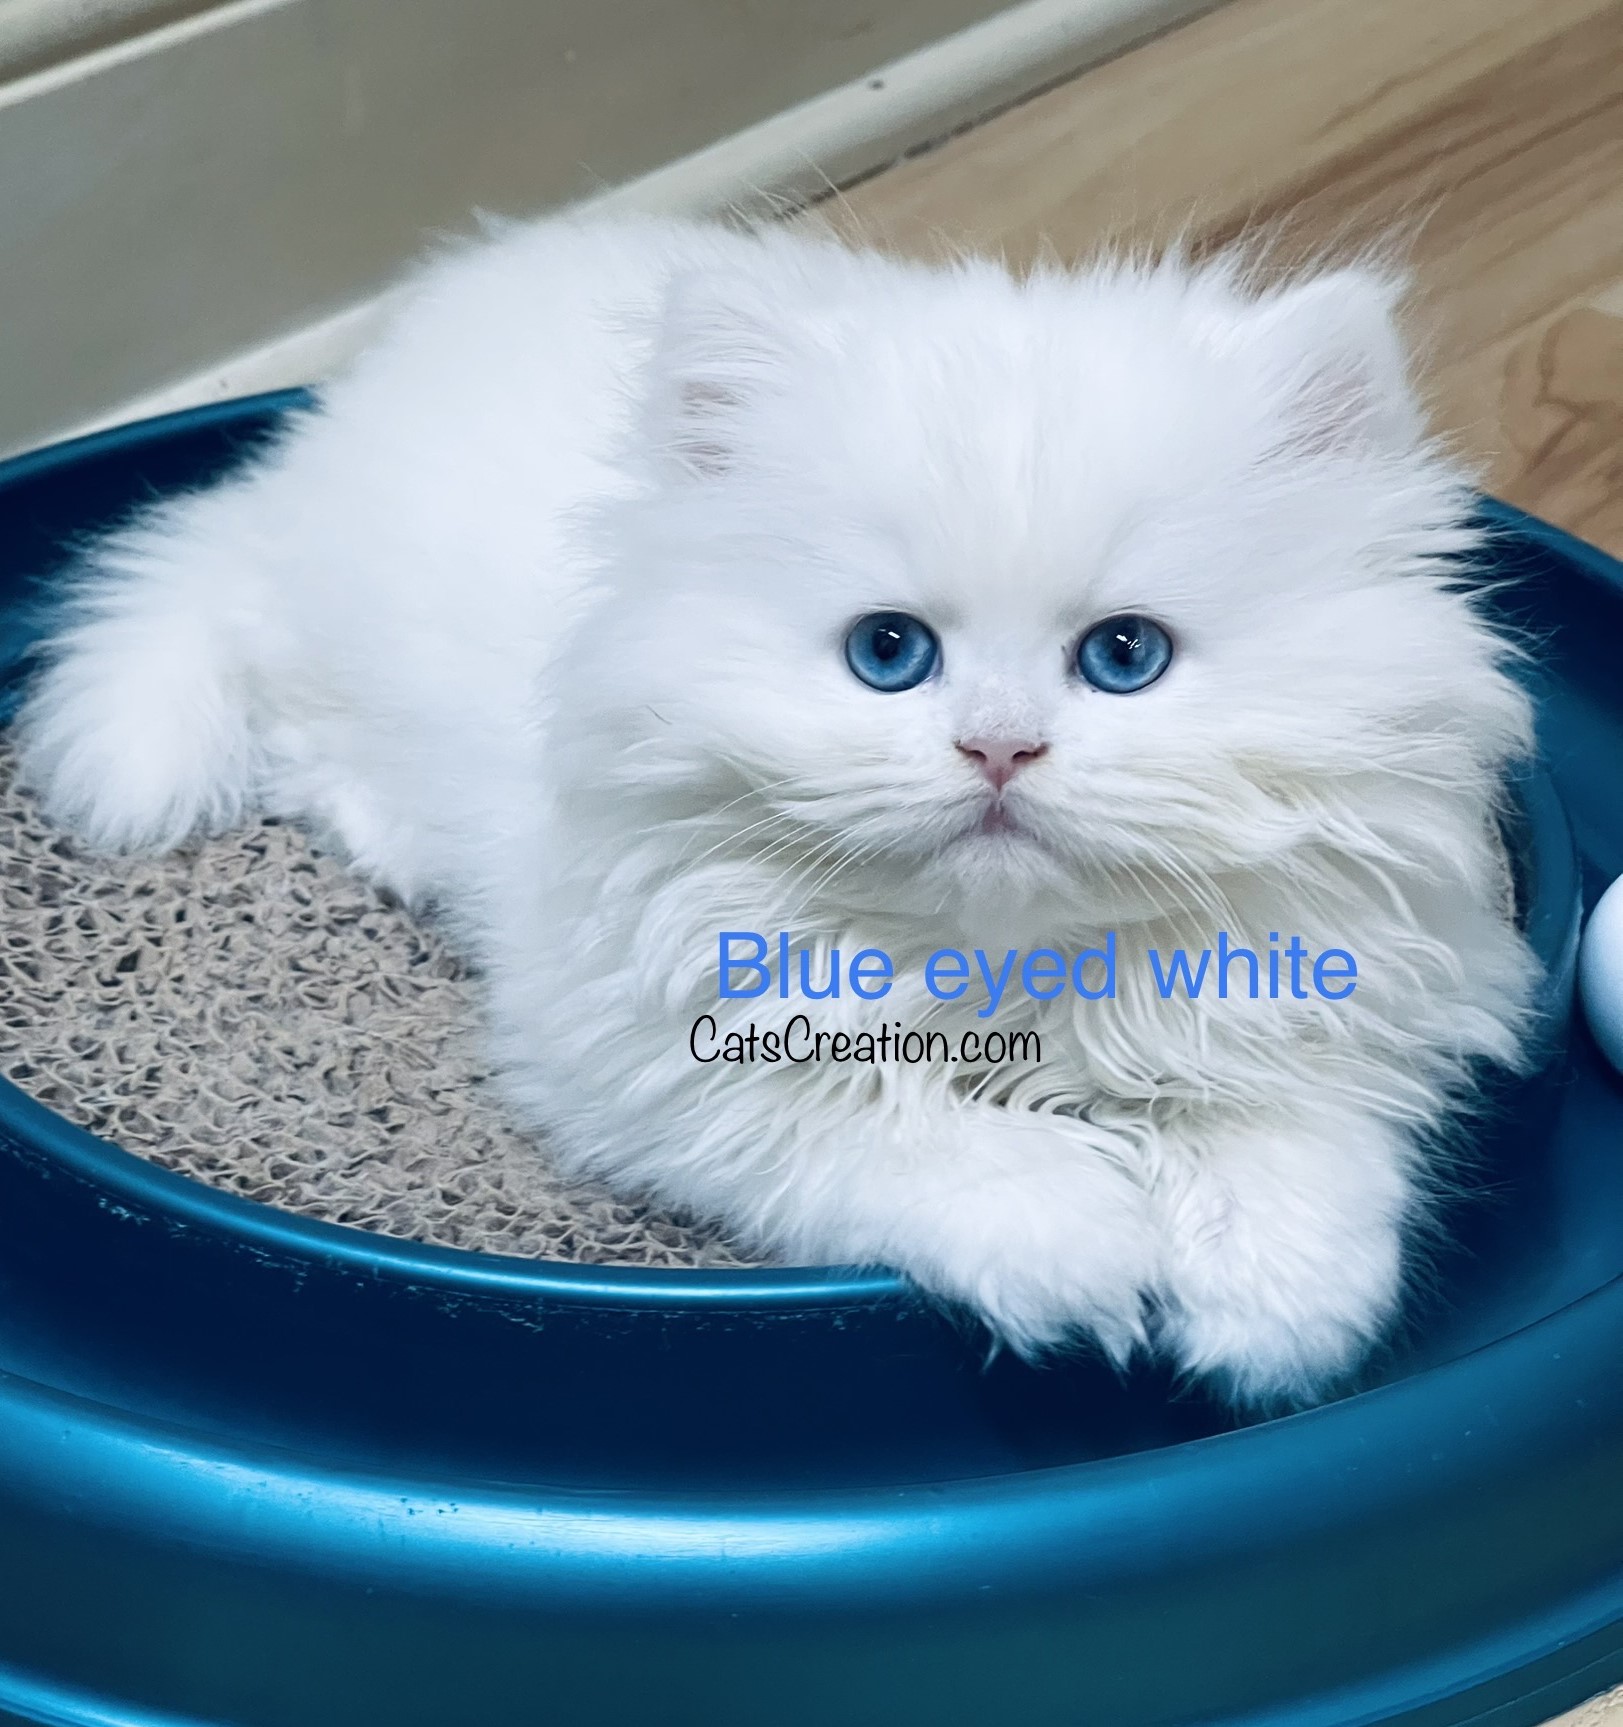 ue eyed white persian kitten on toy